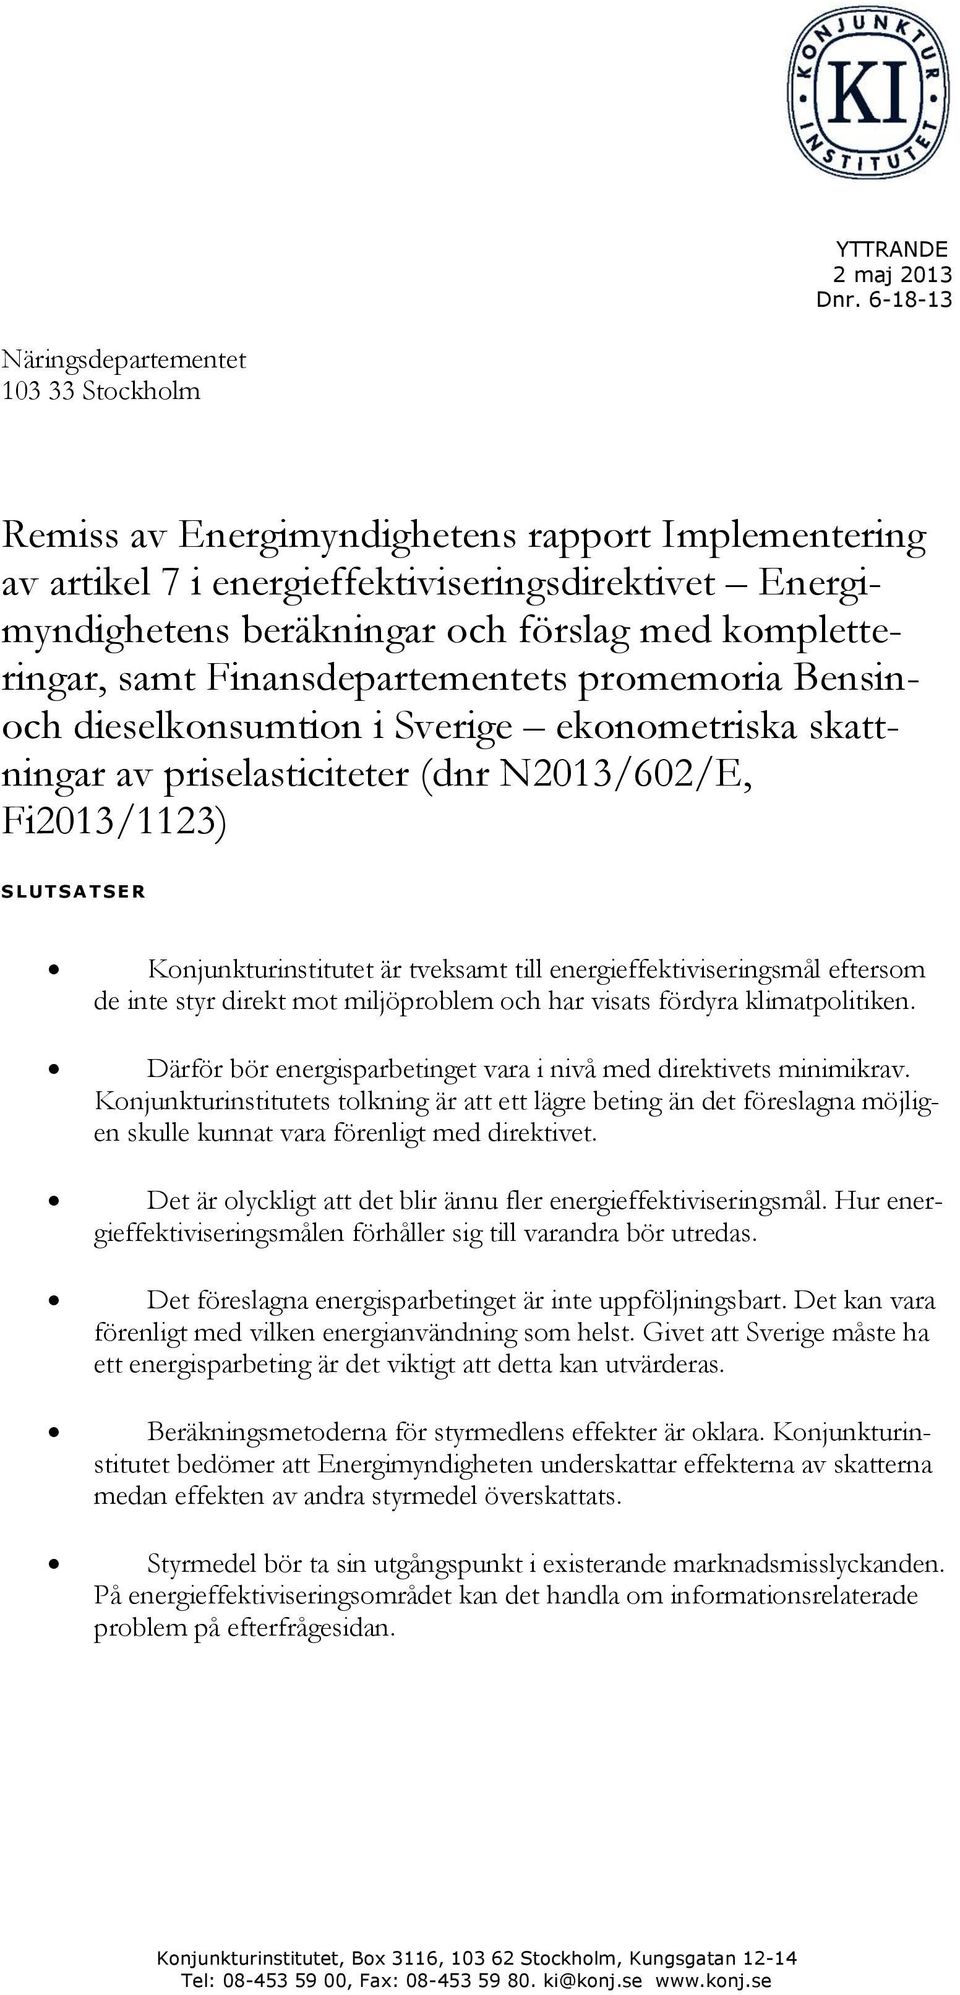 kompletteringar, samt Finansdepartementets promemoria Bensinoch dieselkonsumtion i Sverige ekonometriska skattningar av priselasticiteter (dnr N2013/602/E, Fi2013/1123) S L U T S A T S E R